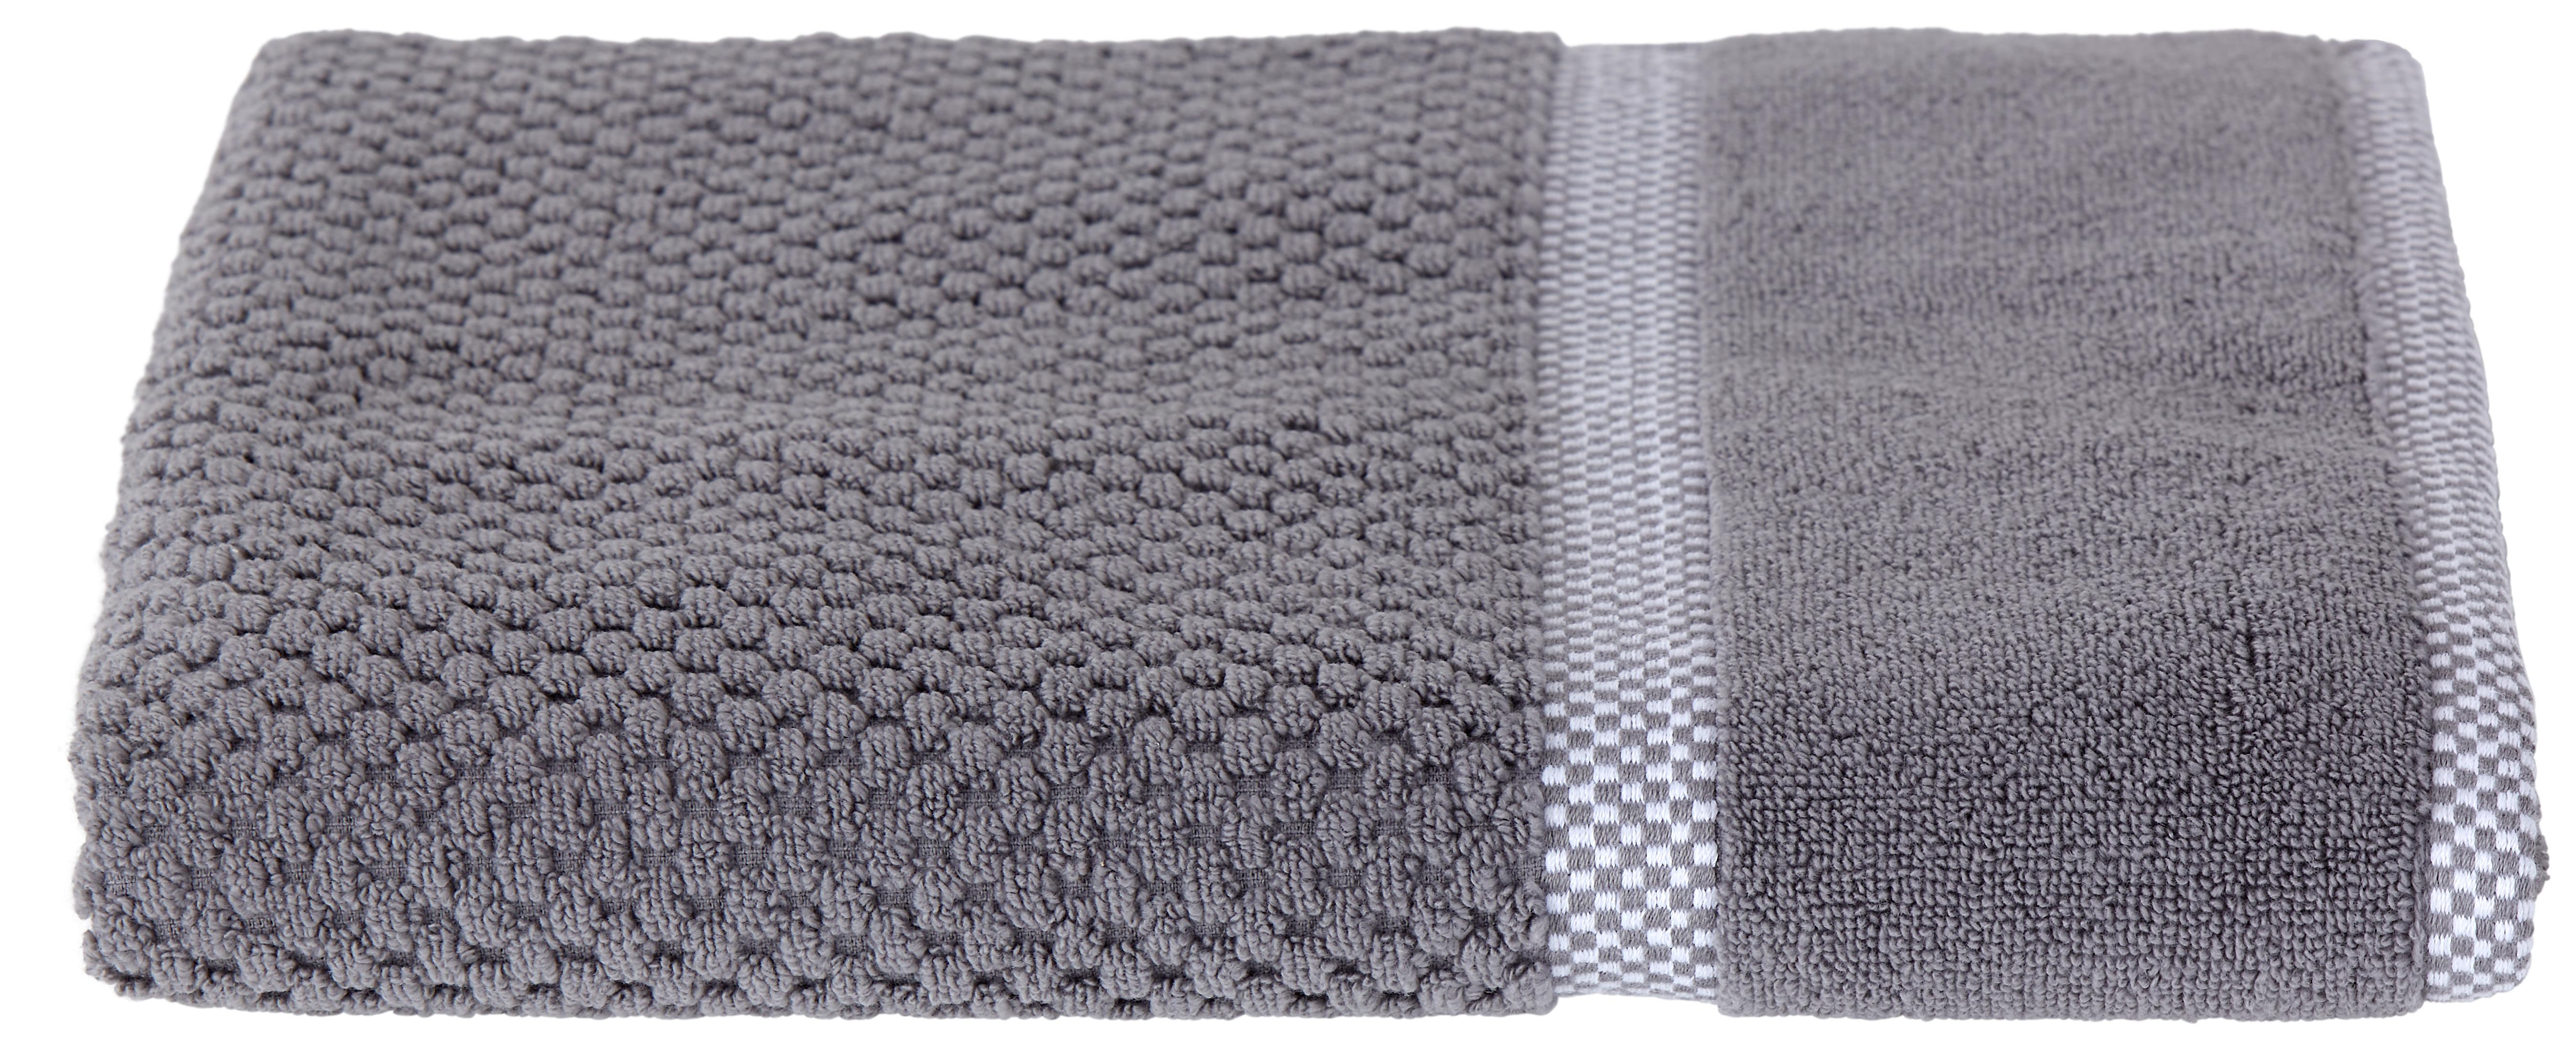 Duschtuch Rocky Baumwolle 500 G/M2 Grau 70x140 cm - Grau, ROMANTIK / LANDHAUS, Textil (70/140cm) - James Wood